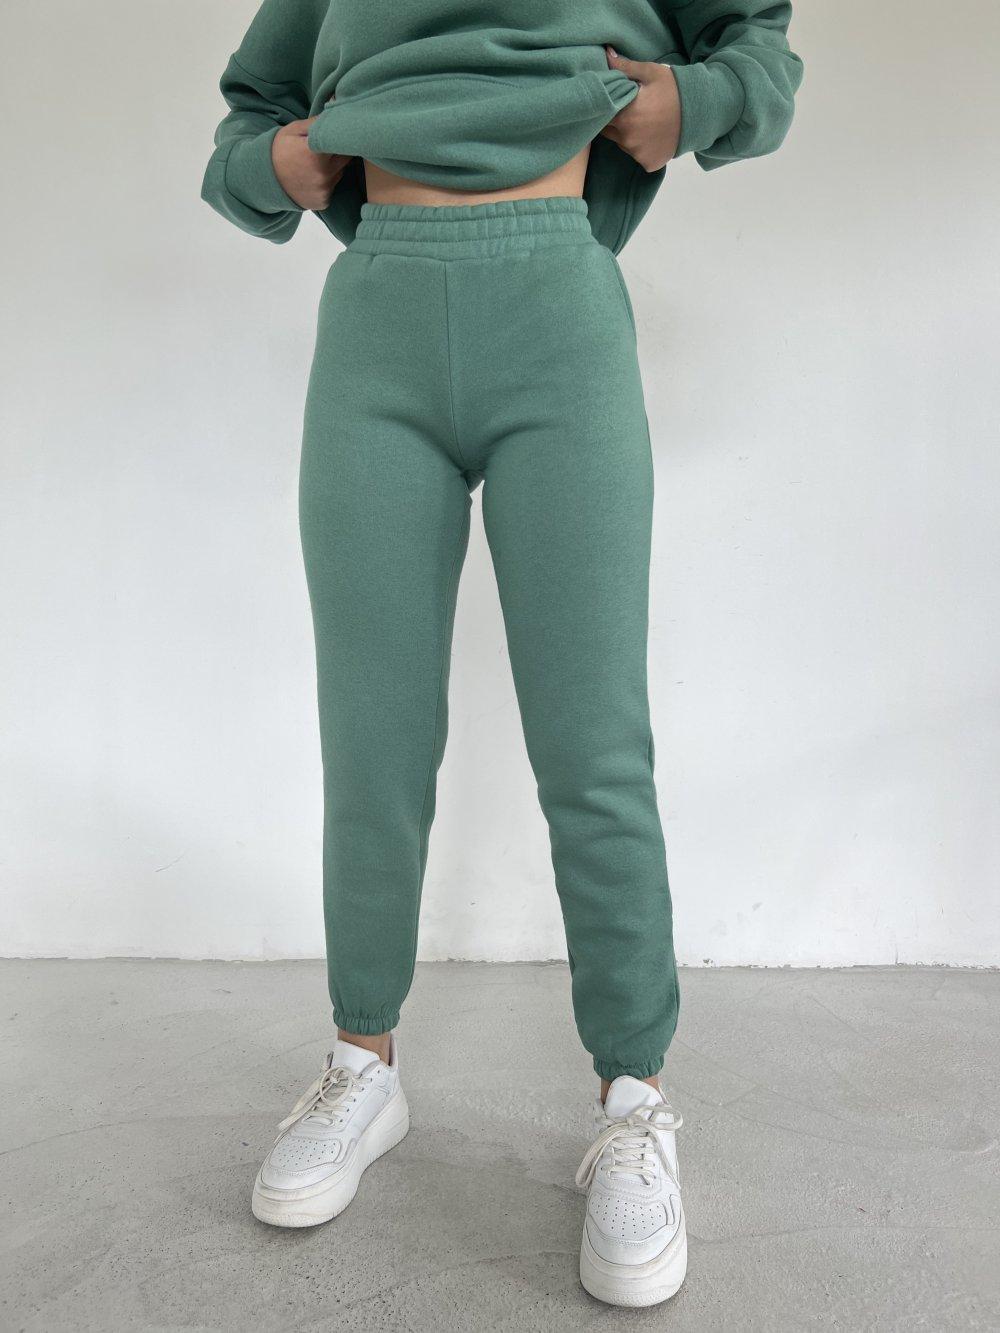 Kapüşonlu Üç İplik Sweat Pantolon Takım 2212 G-7 Mint Yeşili